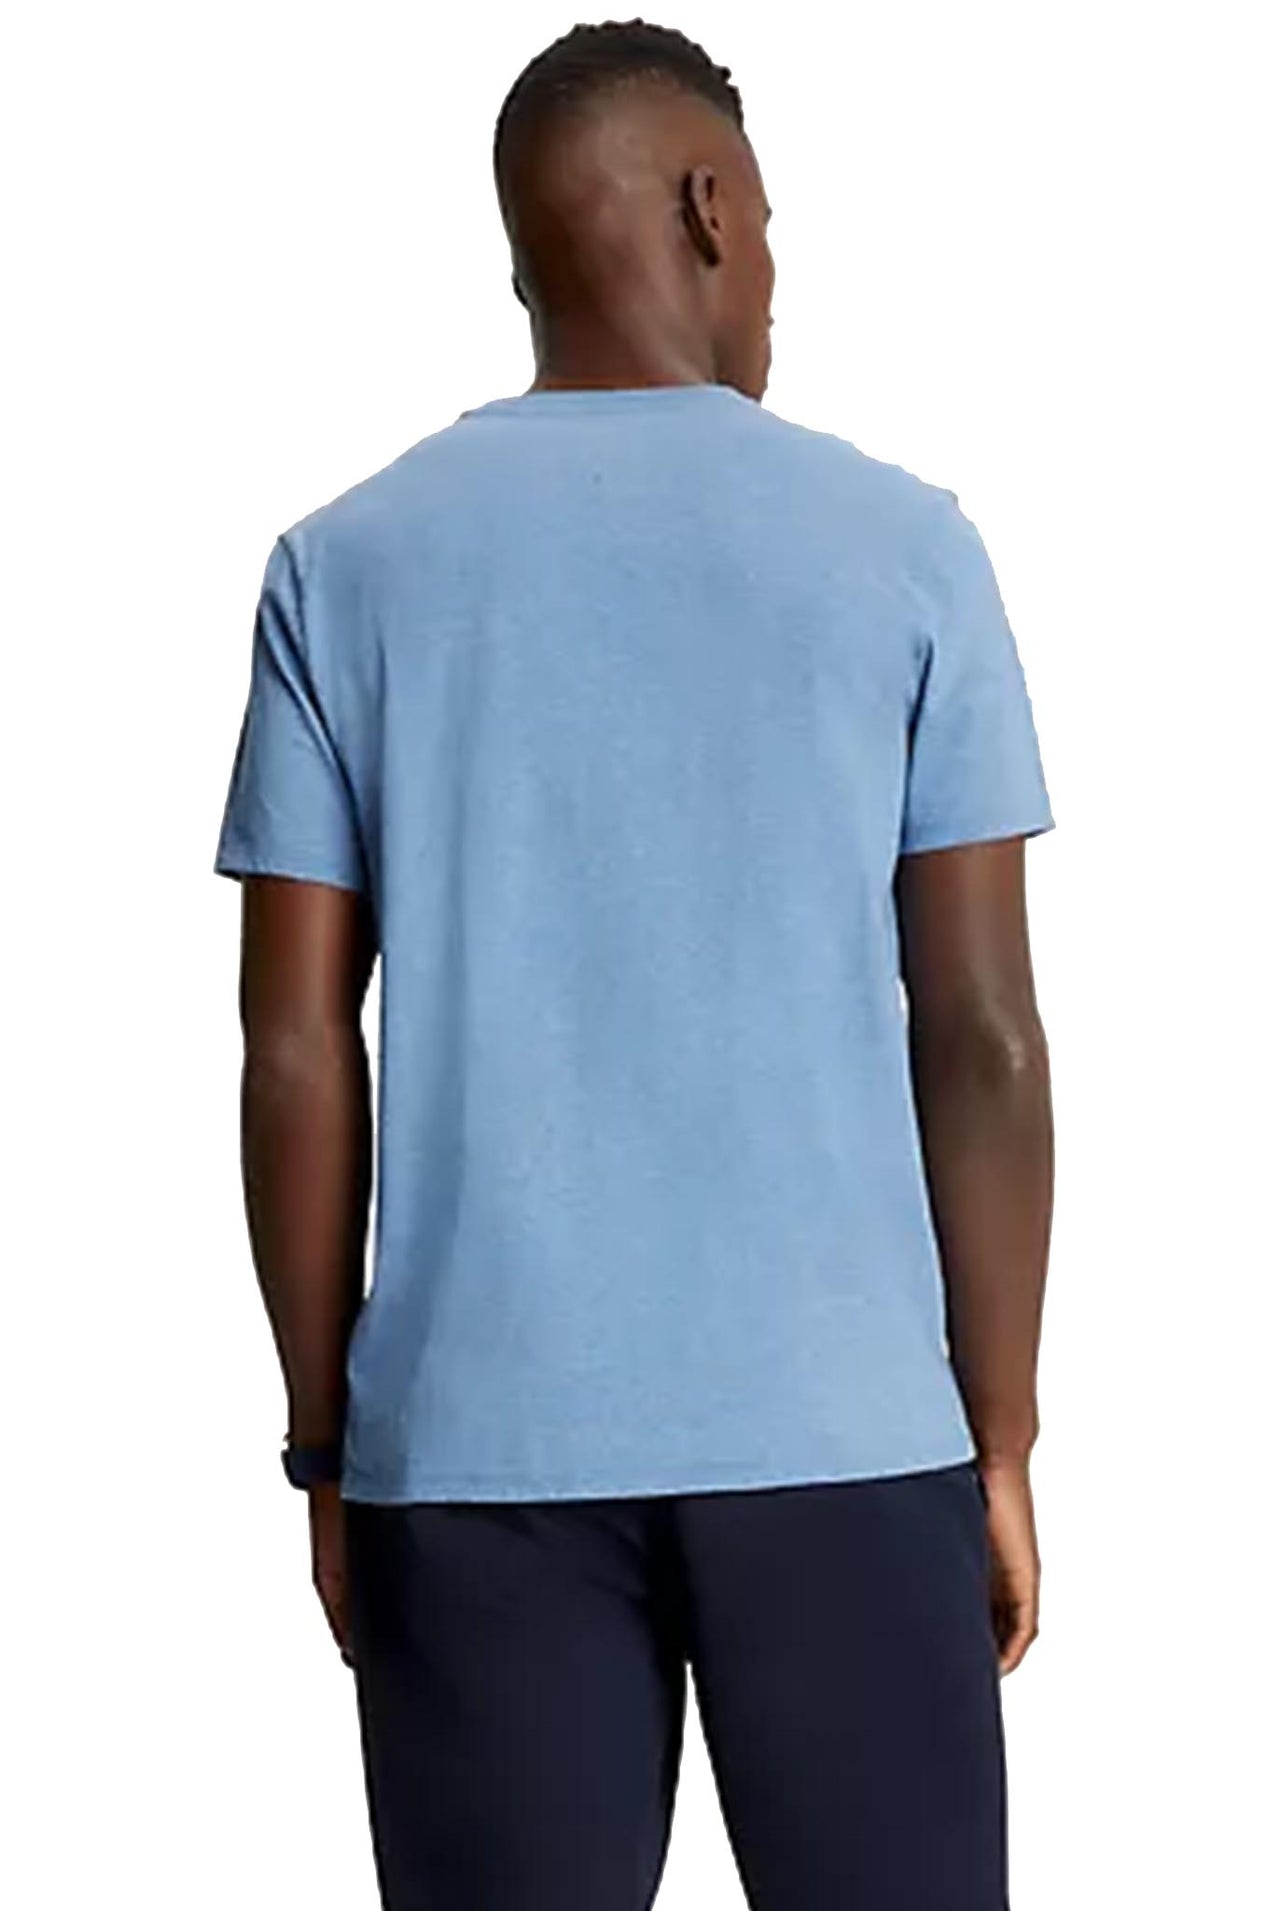 Camiseta Tommy Hilfiger Essential Solid Blue Heather